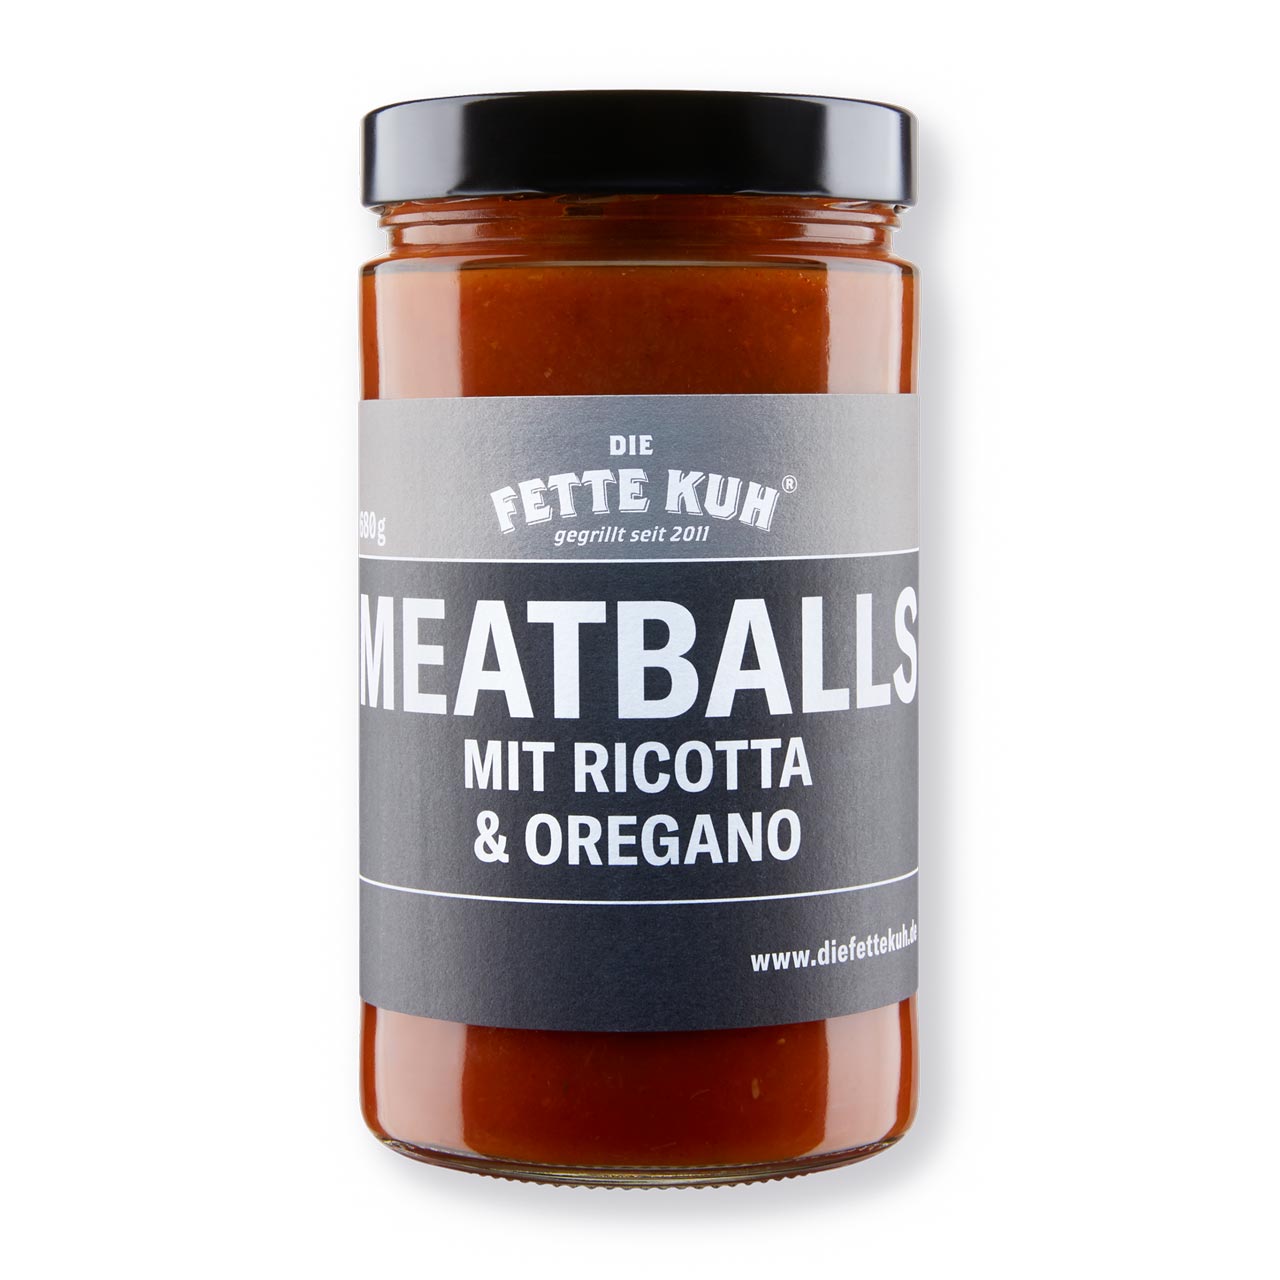 Die Fette Kuh Meatballs - Ricotta & Oregano